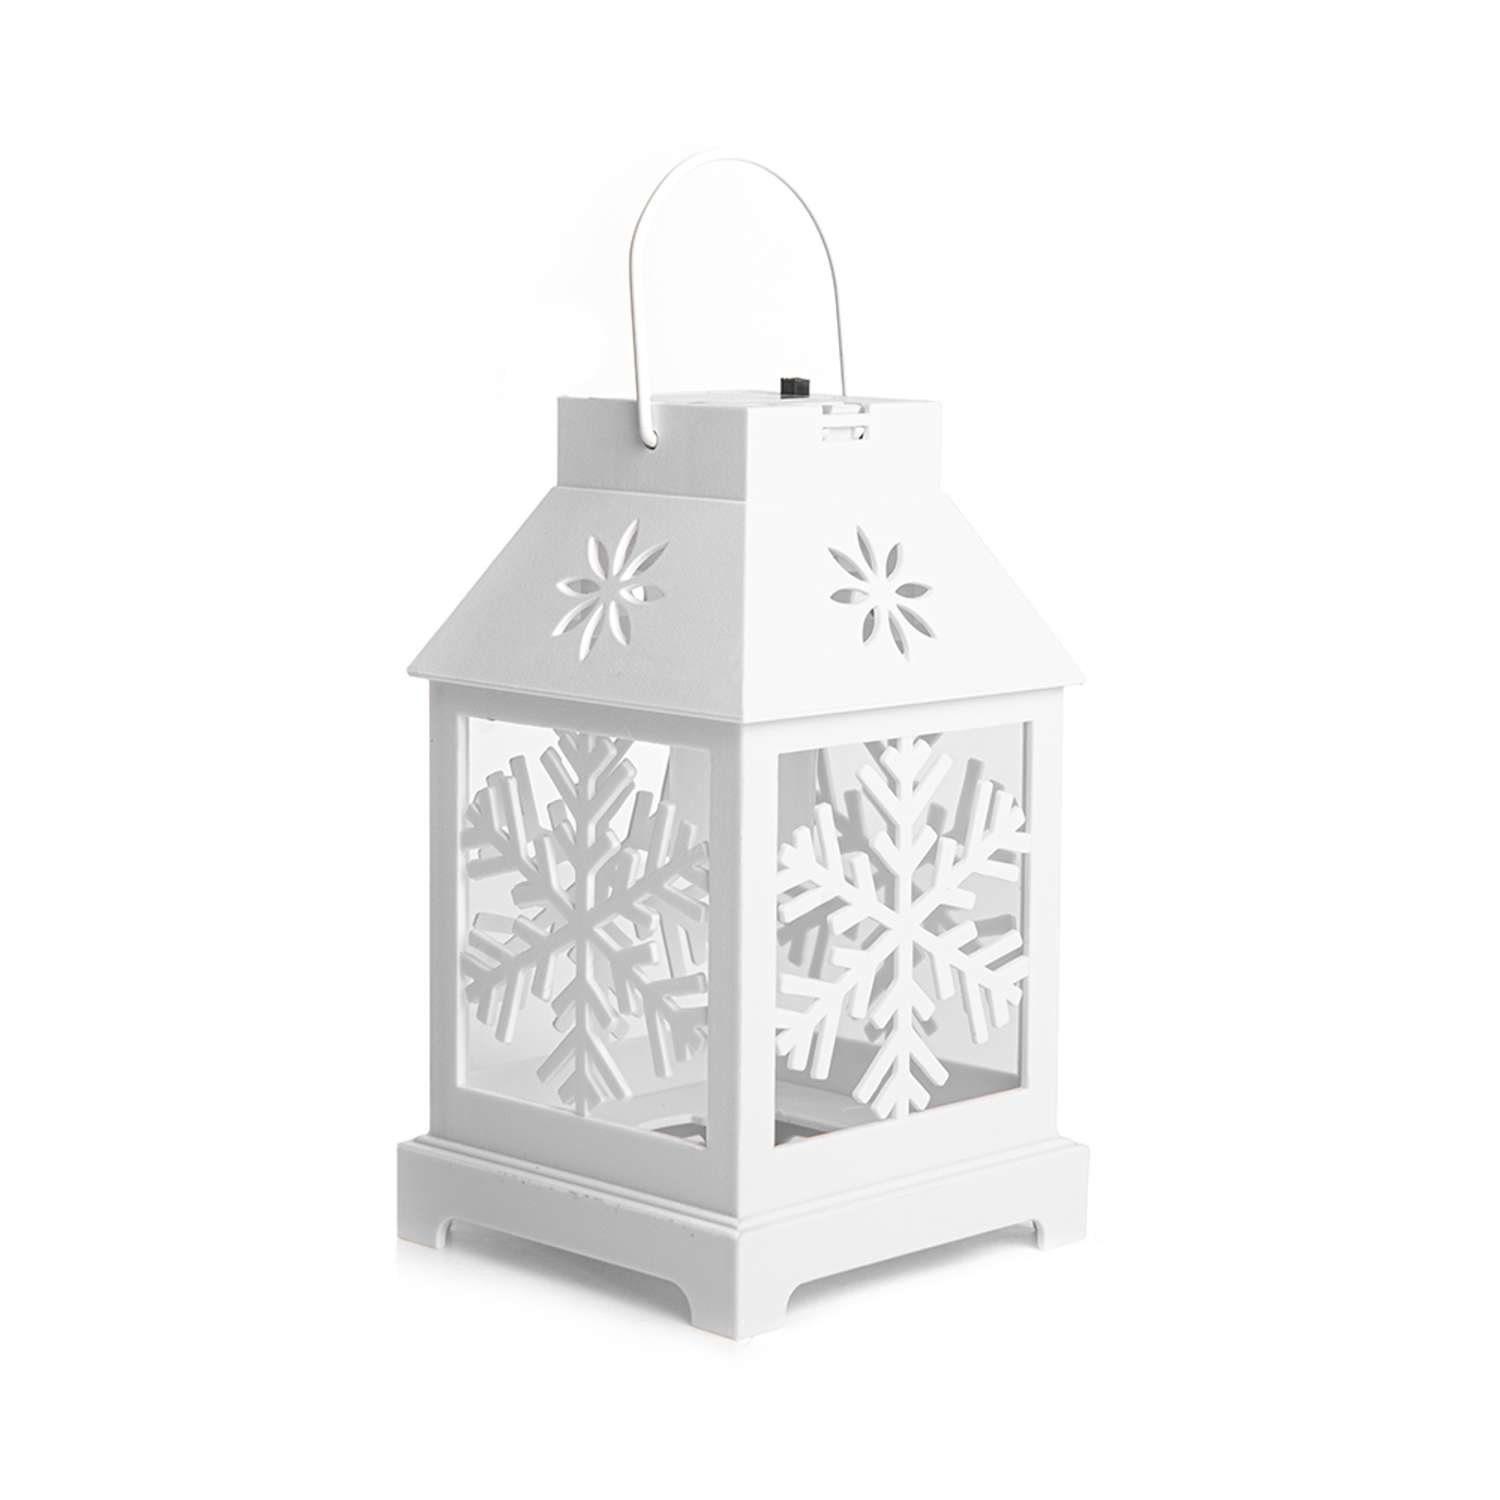 Светодиодный фонарик B52 Snowflakes холодный белый - фото 1